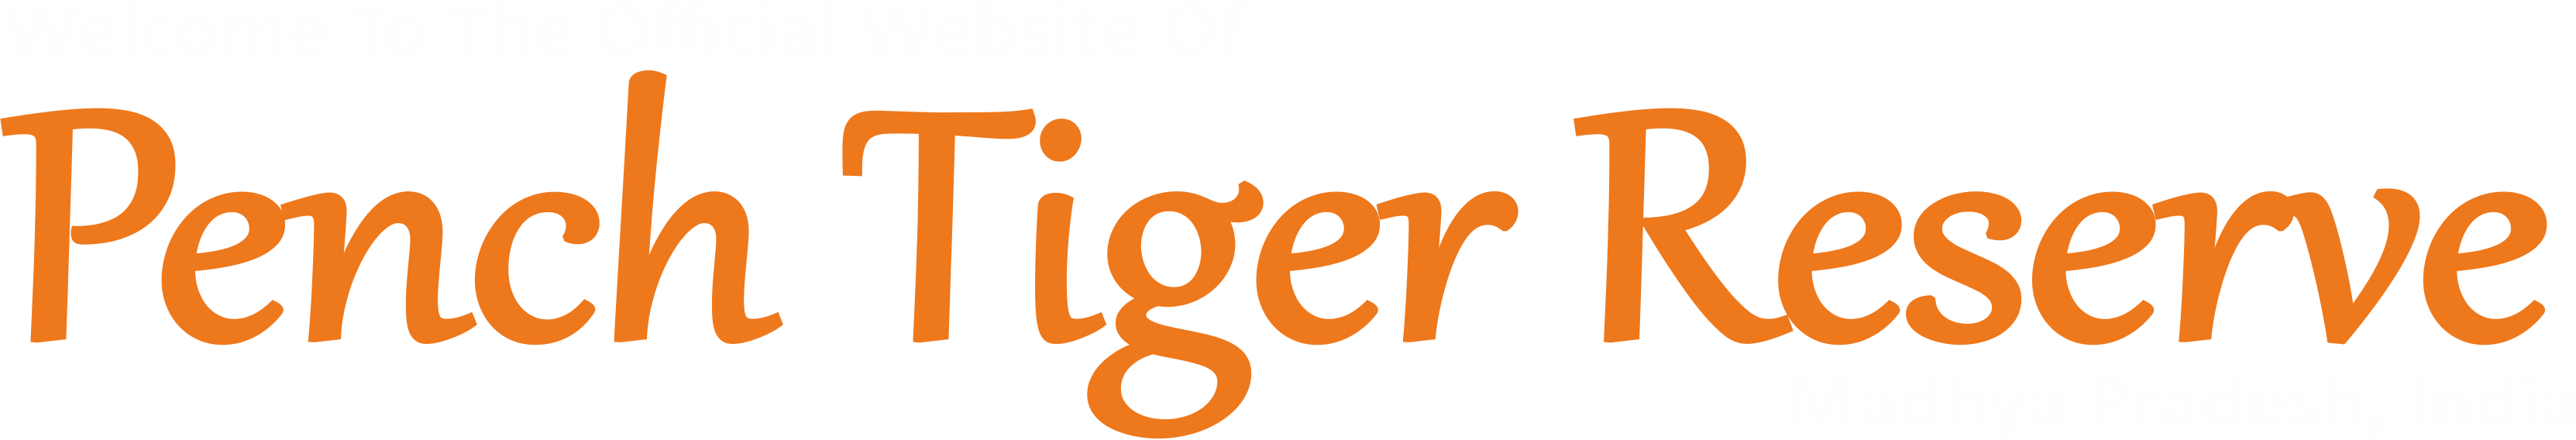 pench-tiger-reserve-banner